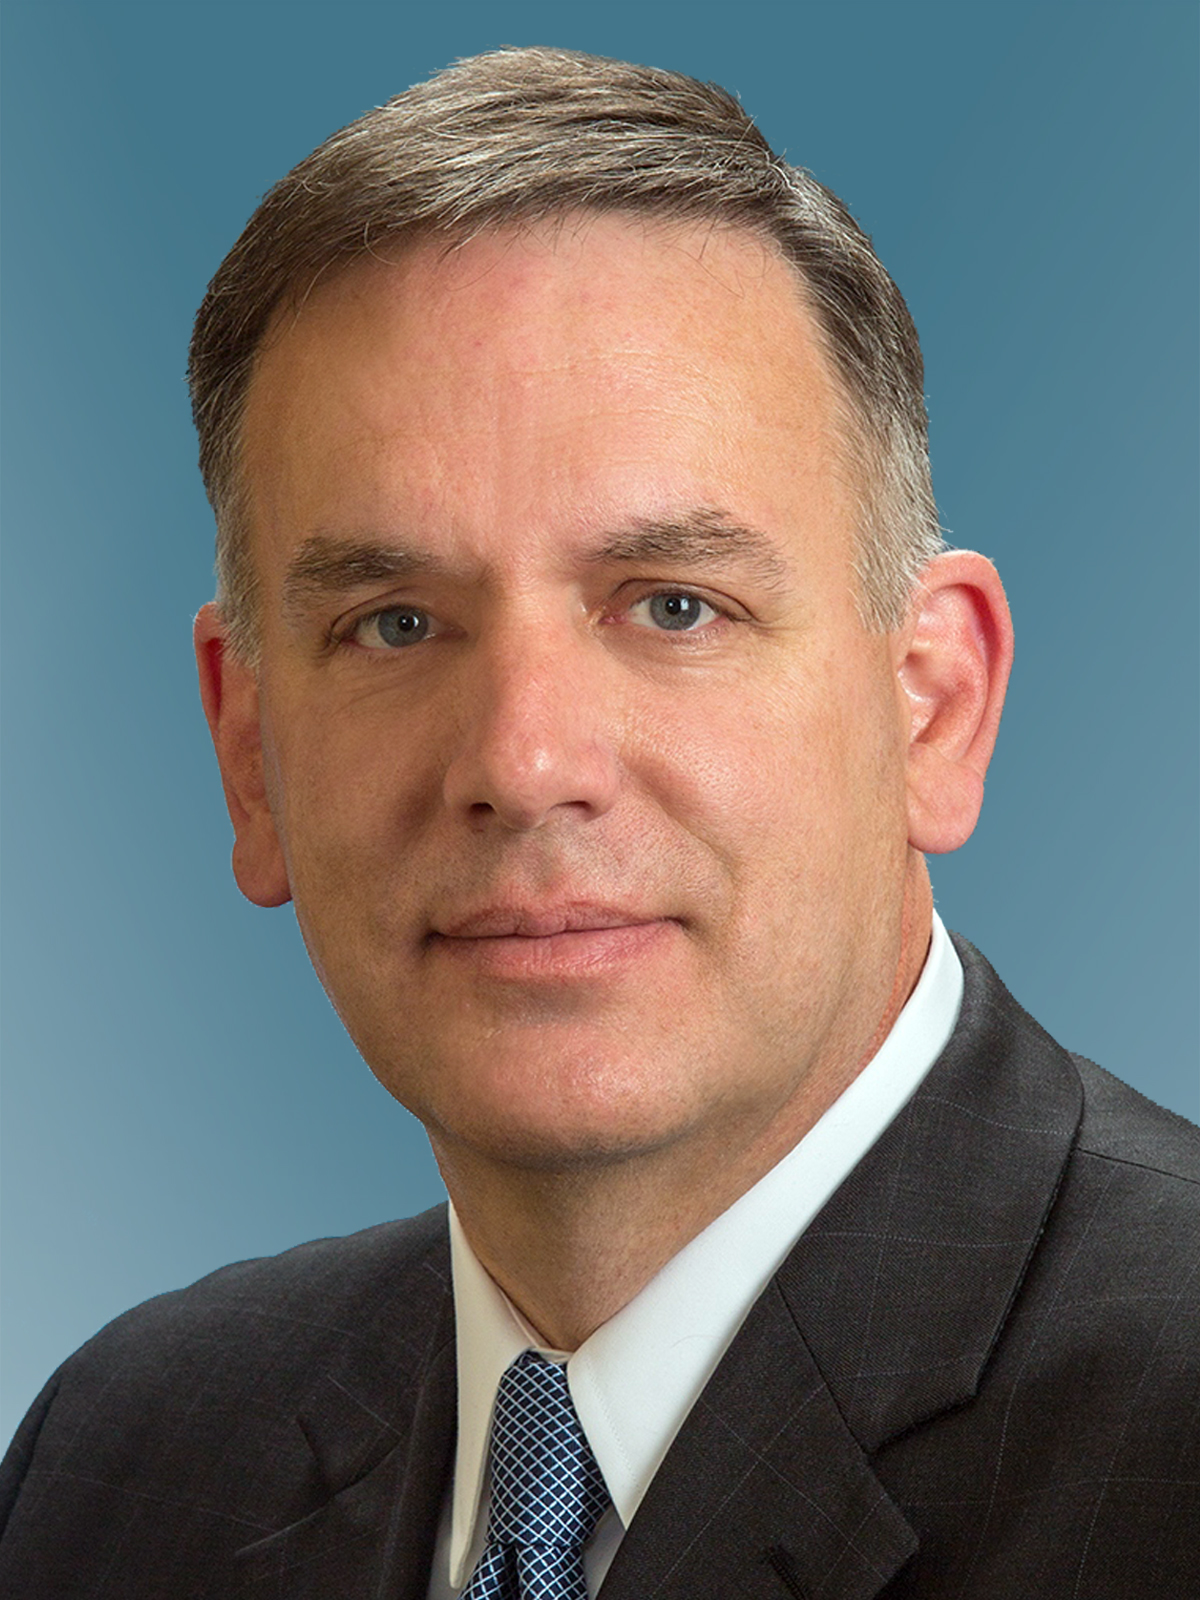 Tony Hemmelgarn, President and Chief Executive Officer